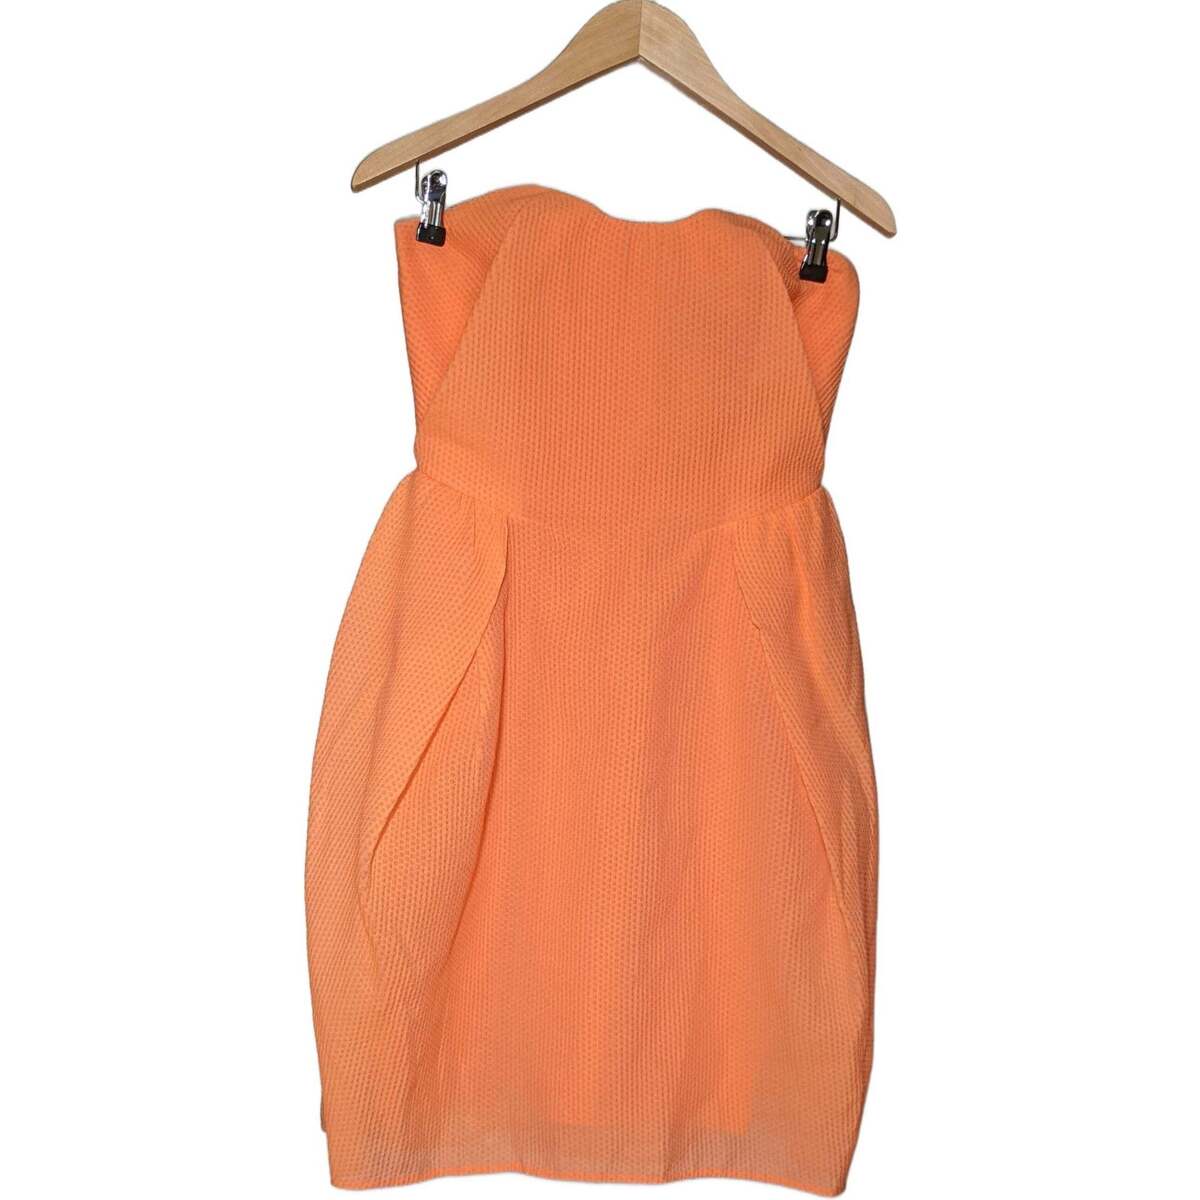 Vêtements Femme Robes courtes Carven robe courte  38 - T2 - M Orange Orange